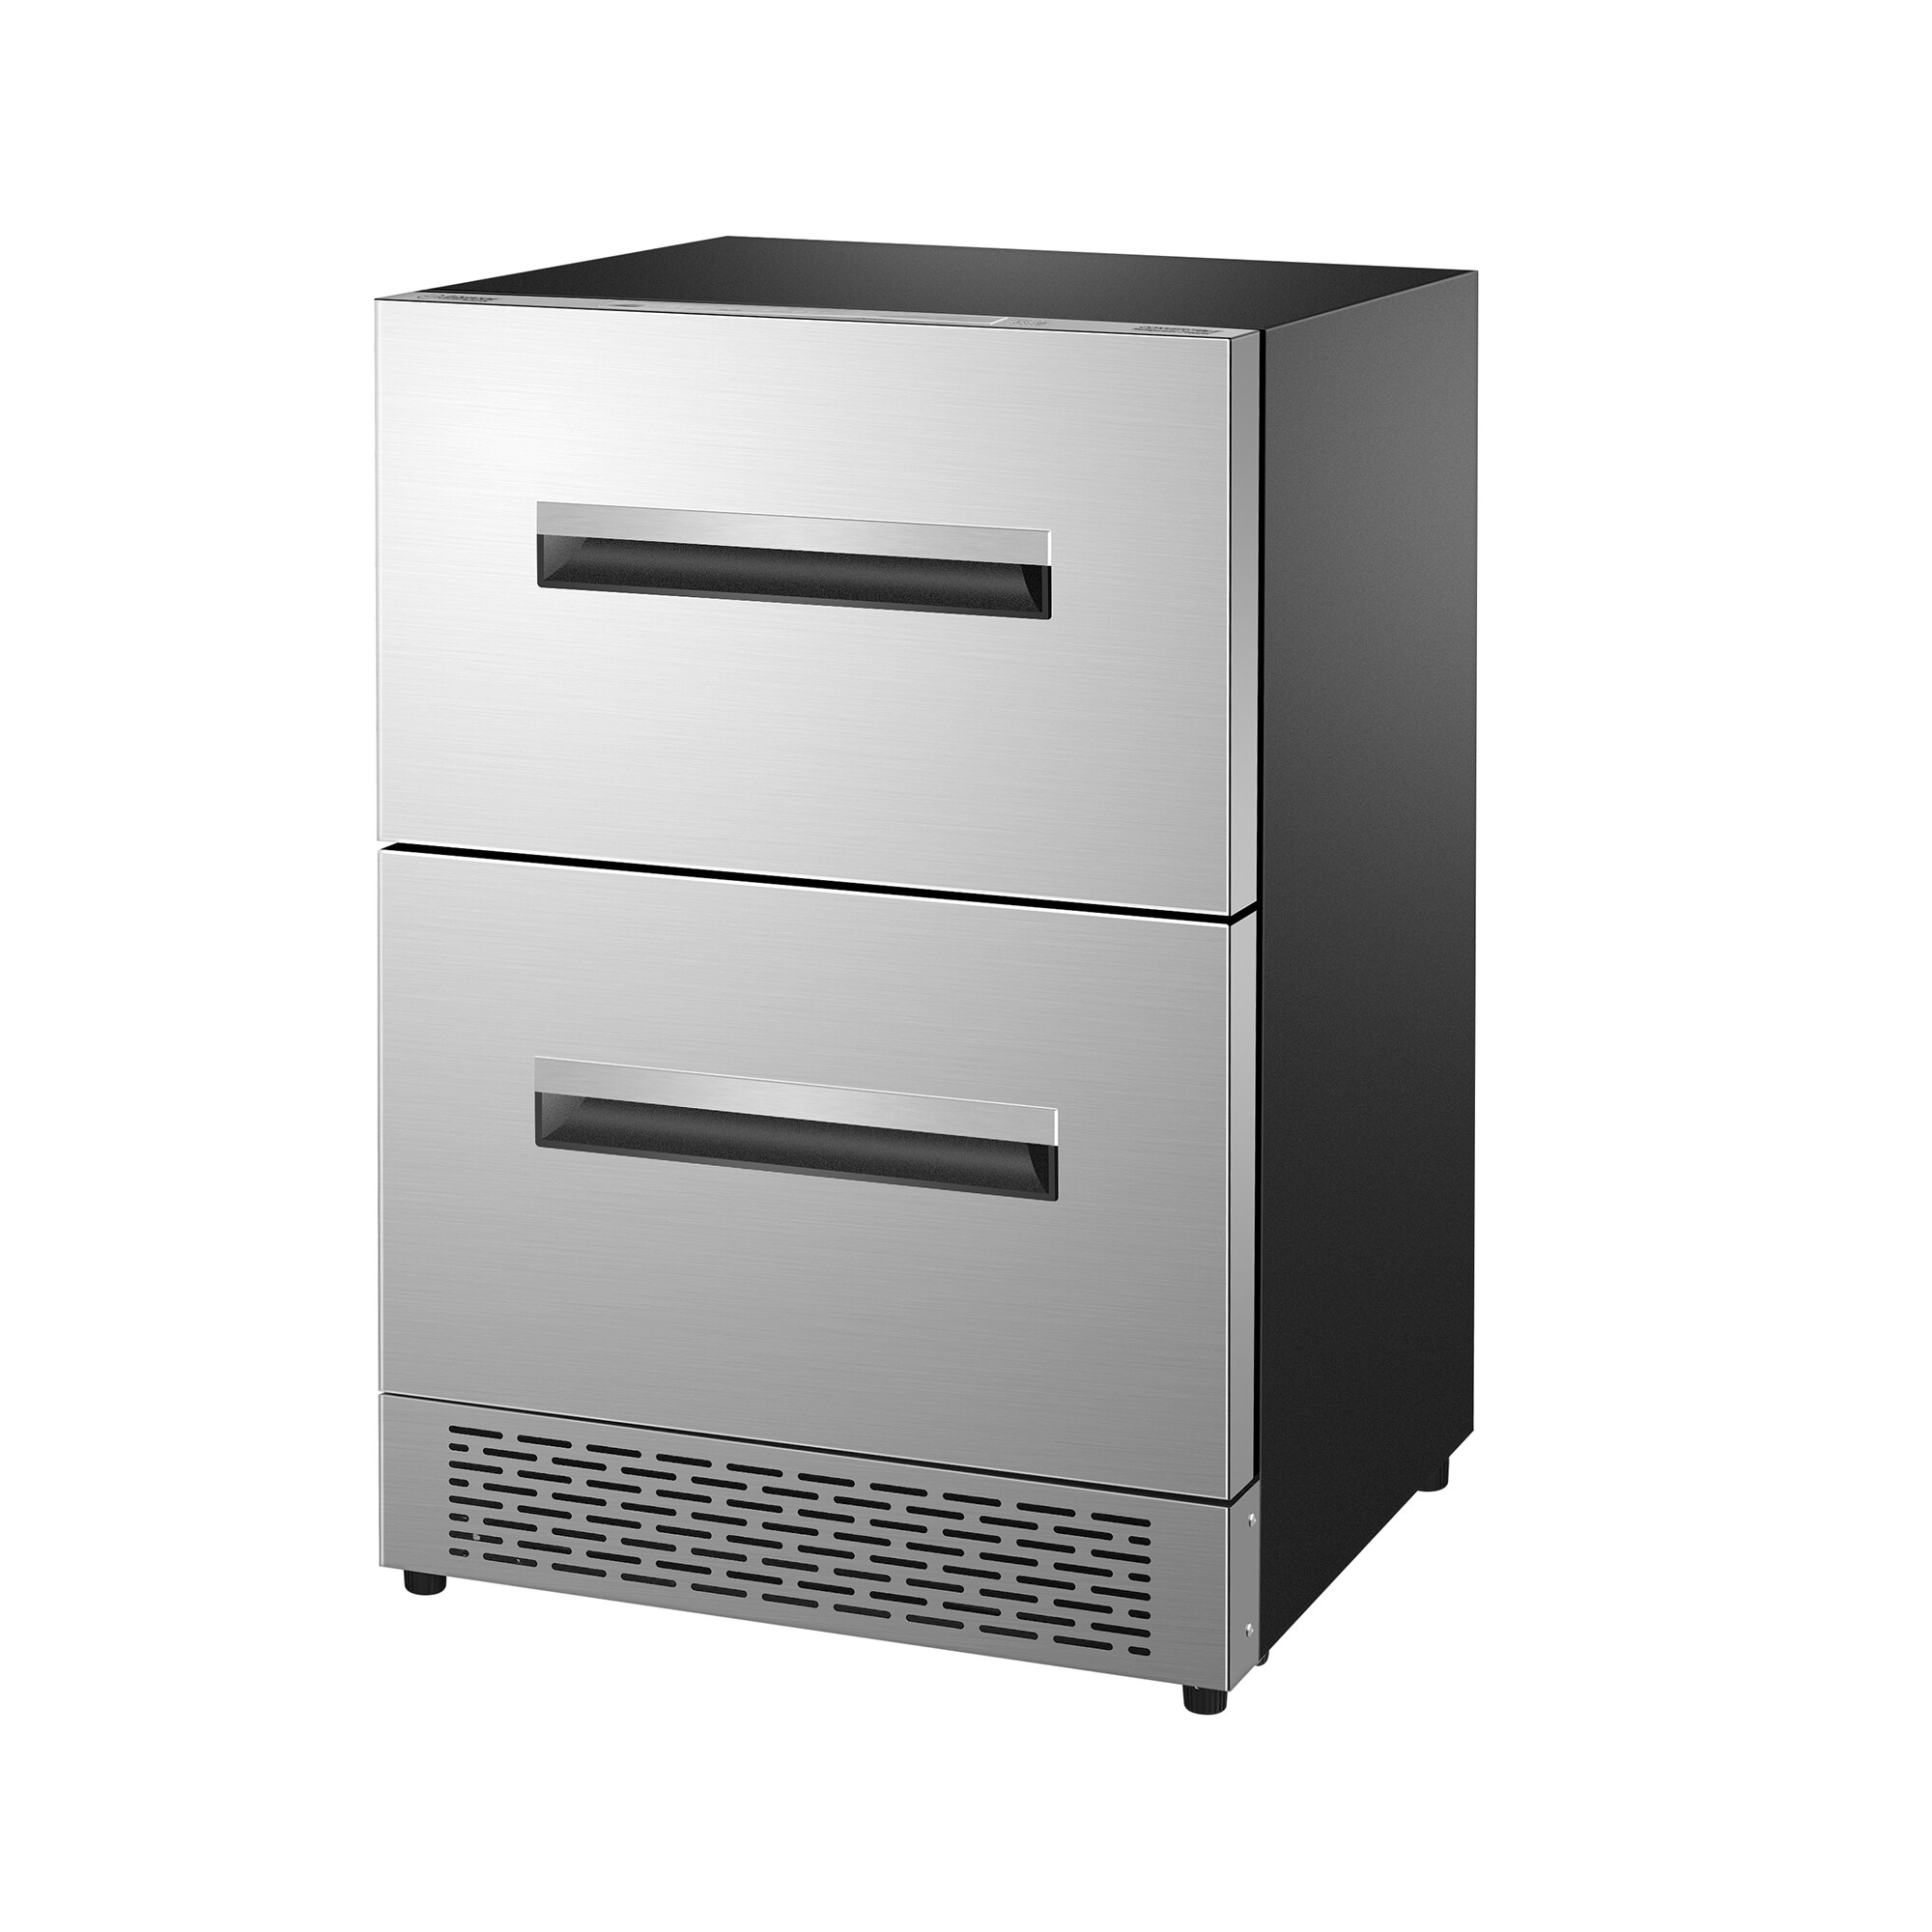 China Custom Refrigerator Stainless Steel Defrost Heater